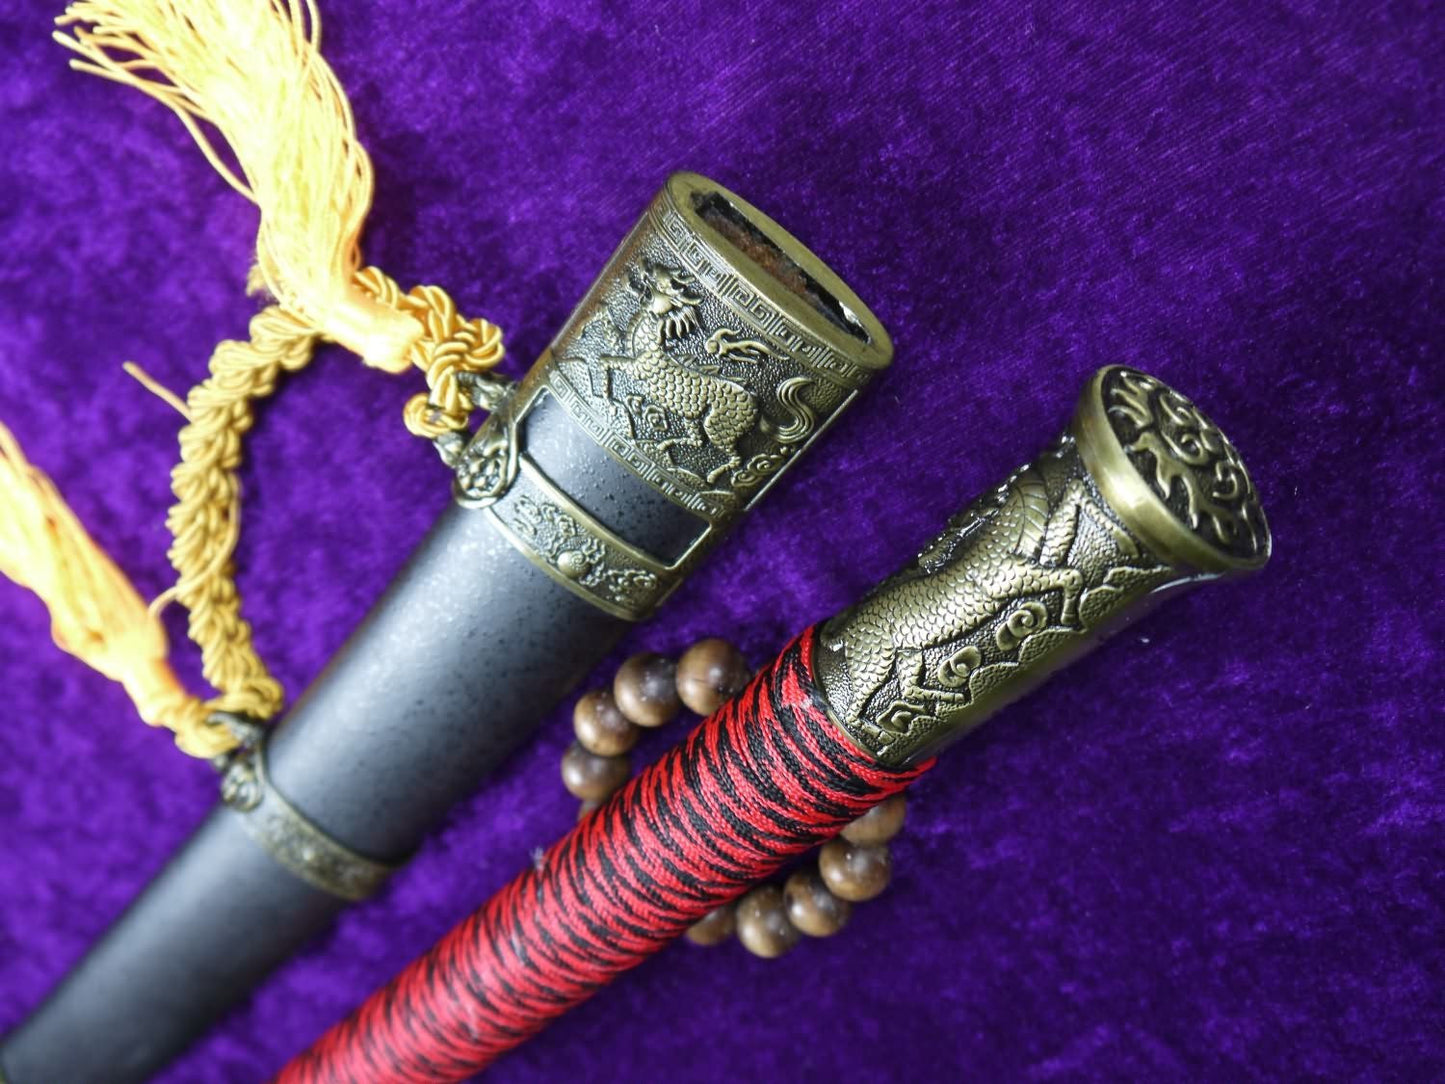 Kang xi dao sword/Damascus steel/Wood scabbard/China chop sabers - Chinese sword shop